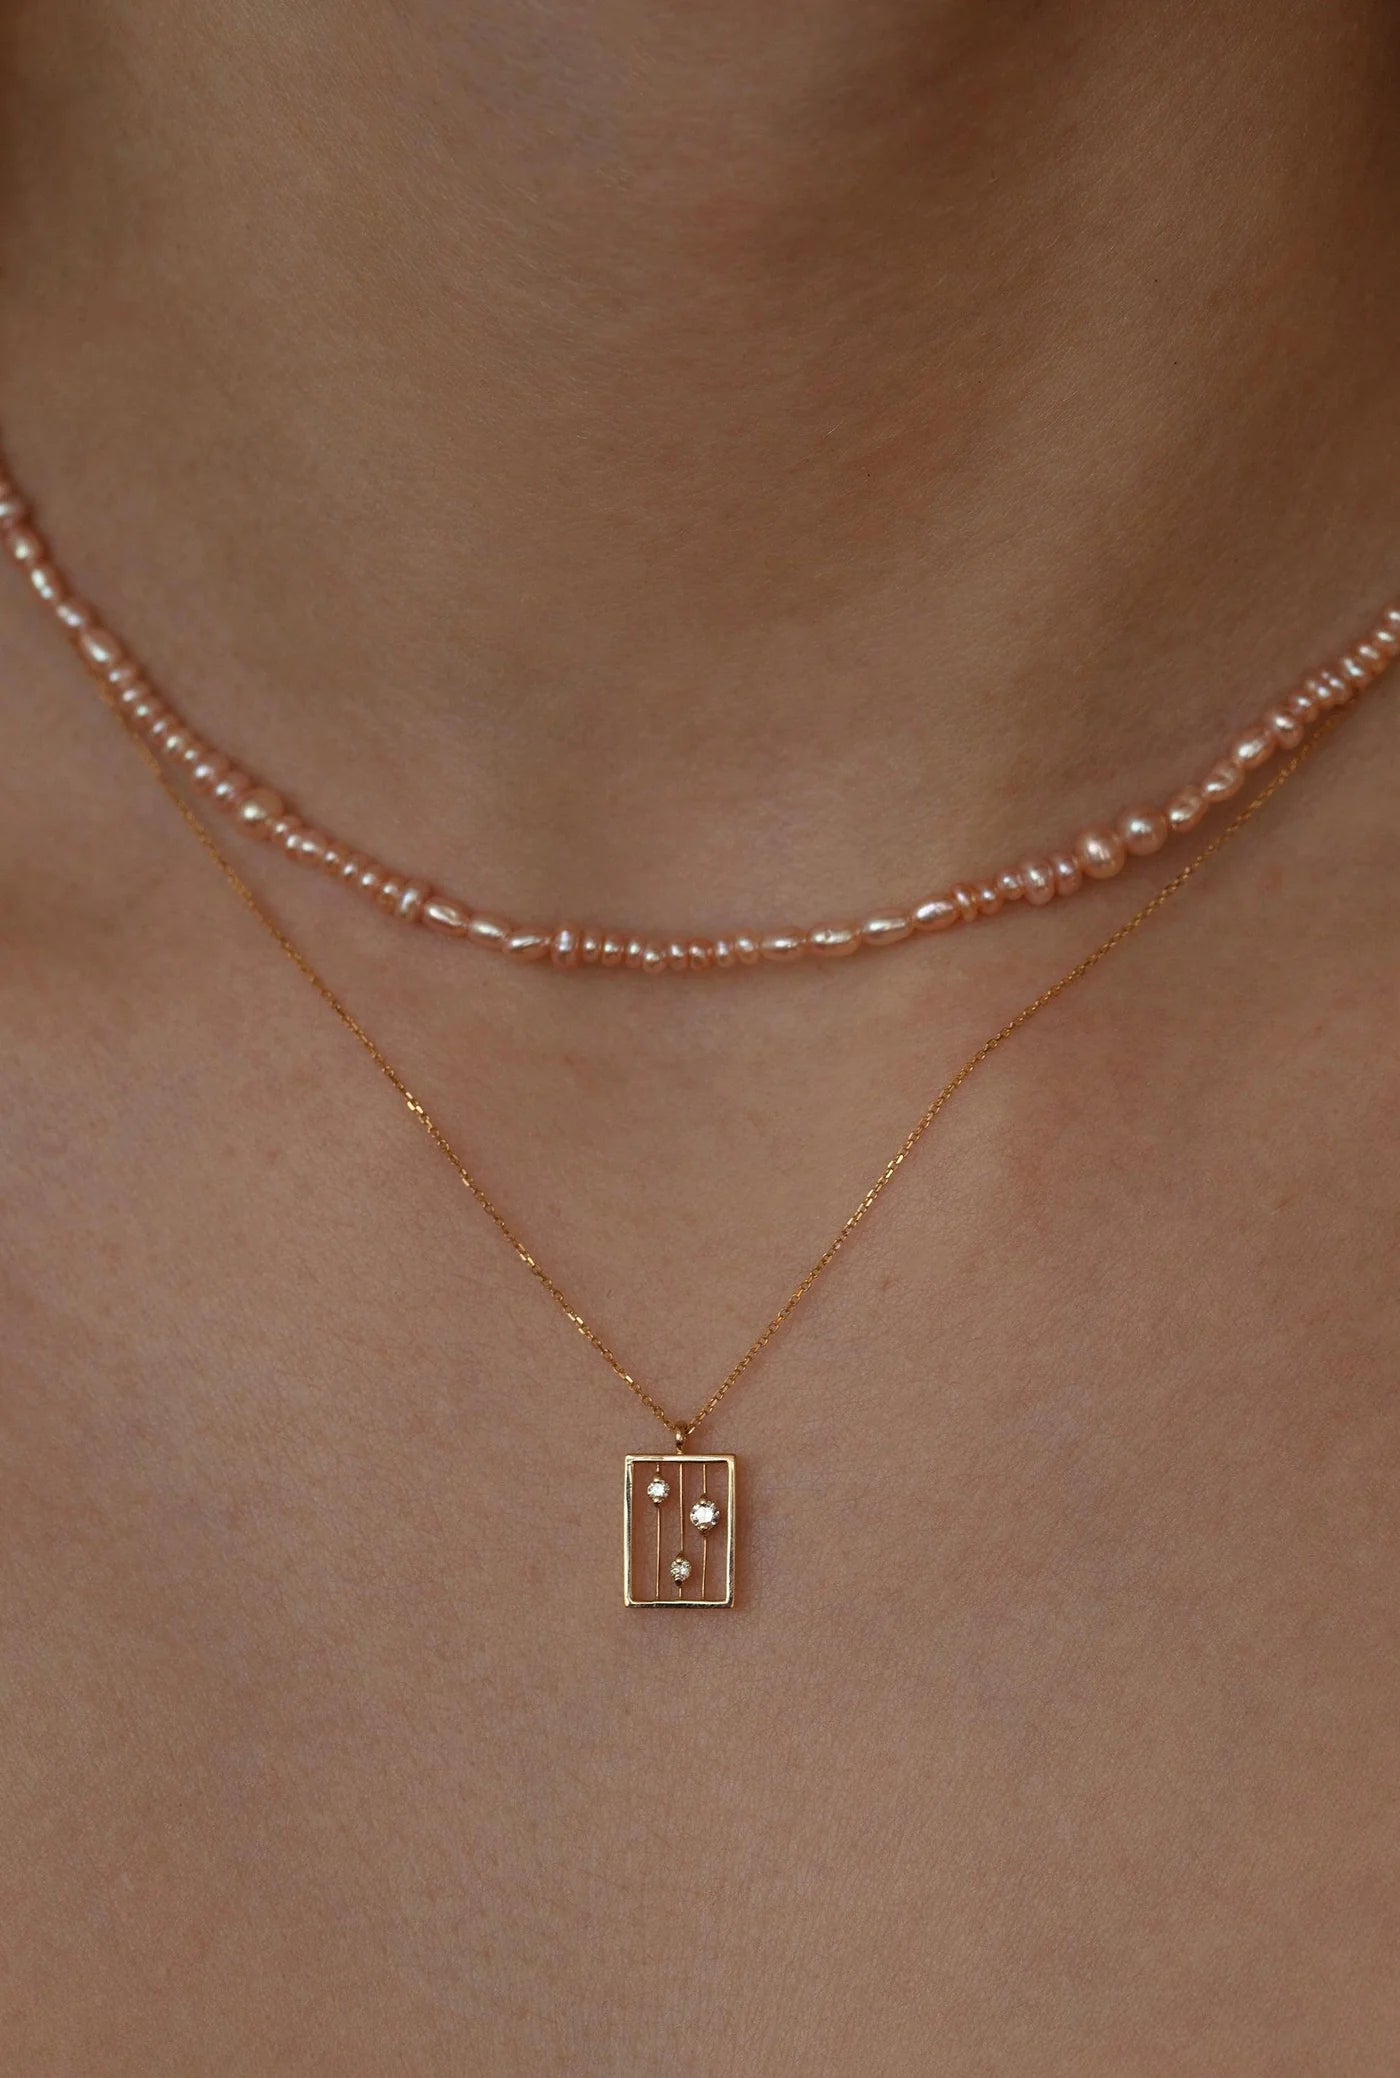 wwake / drift necklace - diamond